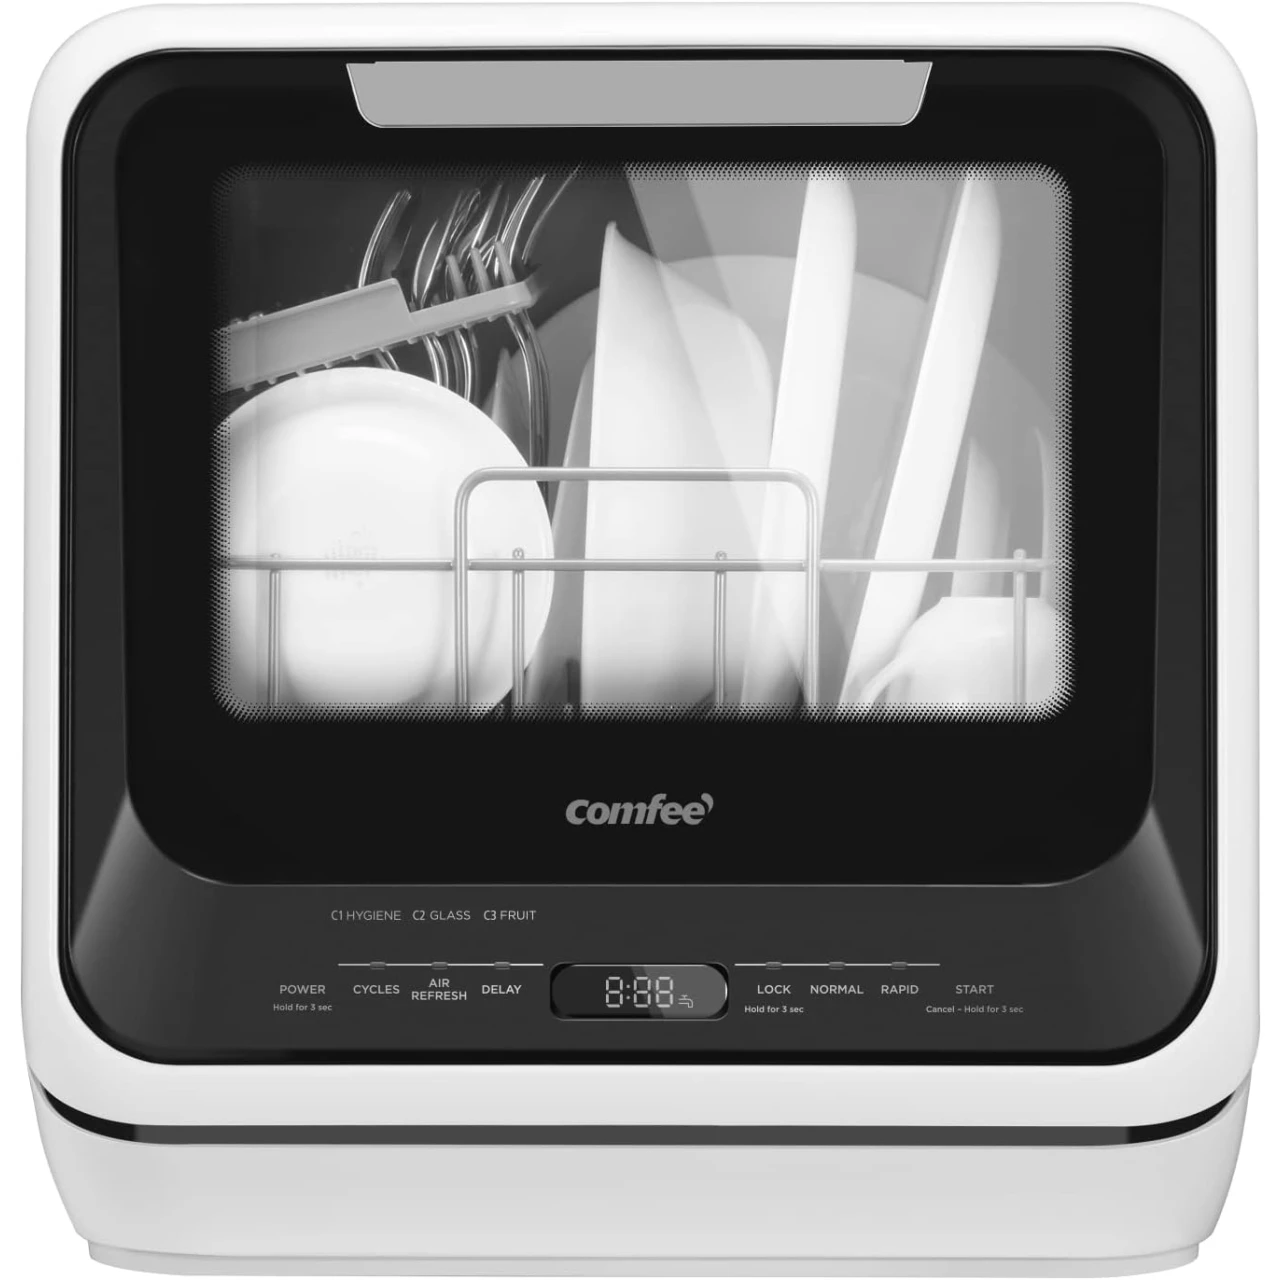 COMFEE&rsquo; Portable Dishwasher Countertop, Mini Dishwasher